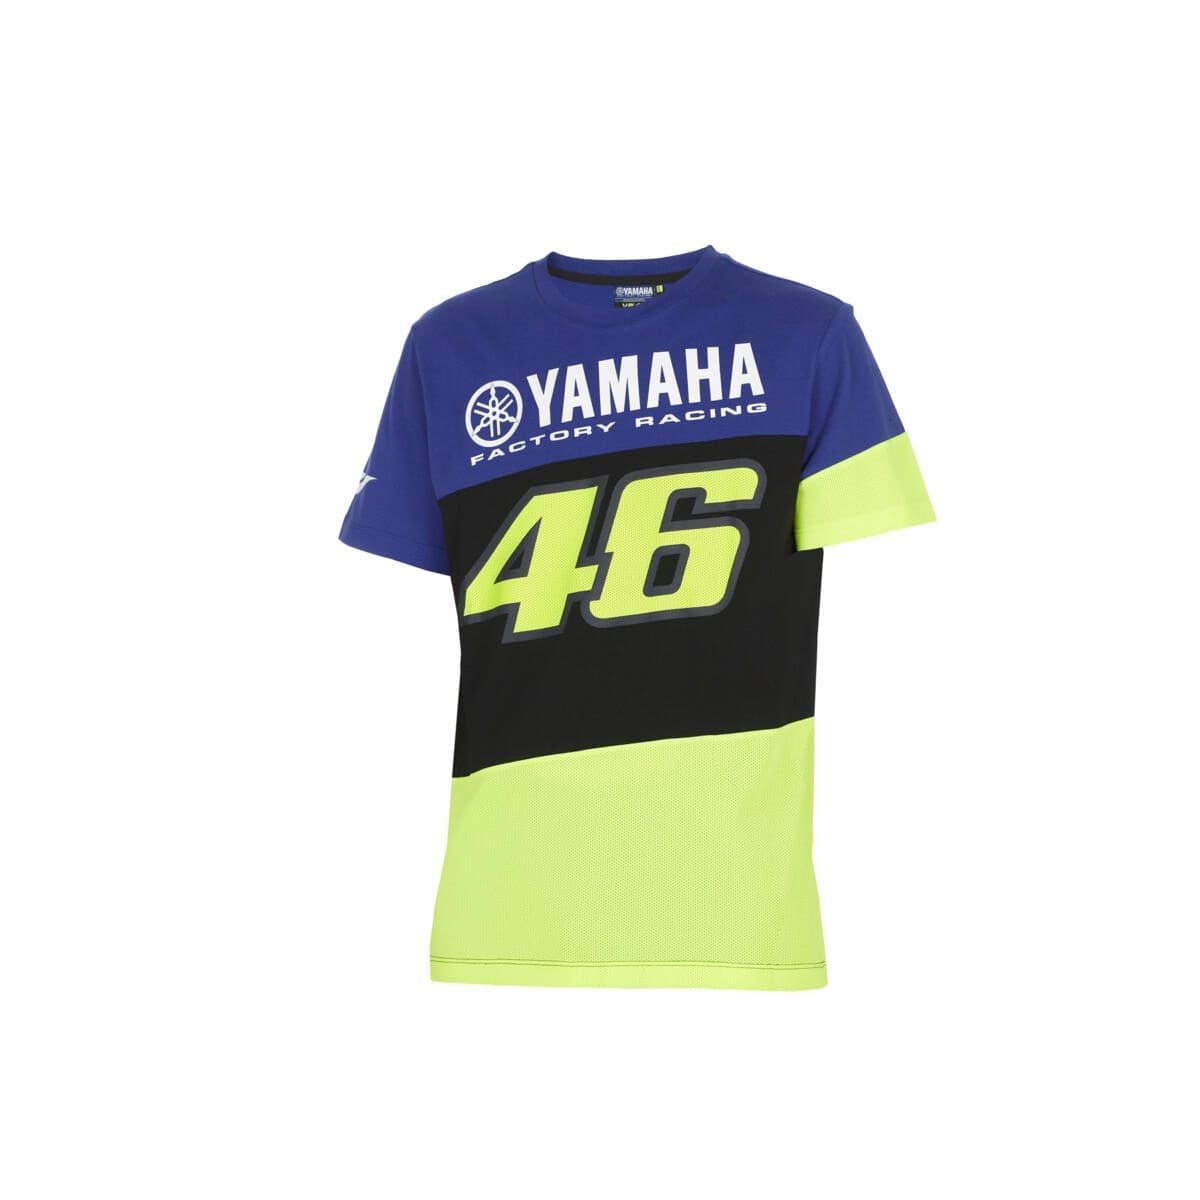 VR46 T-Shirt from Yamaha